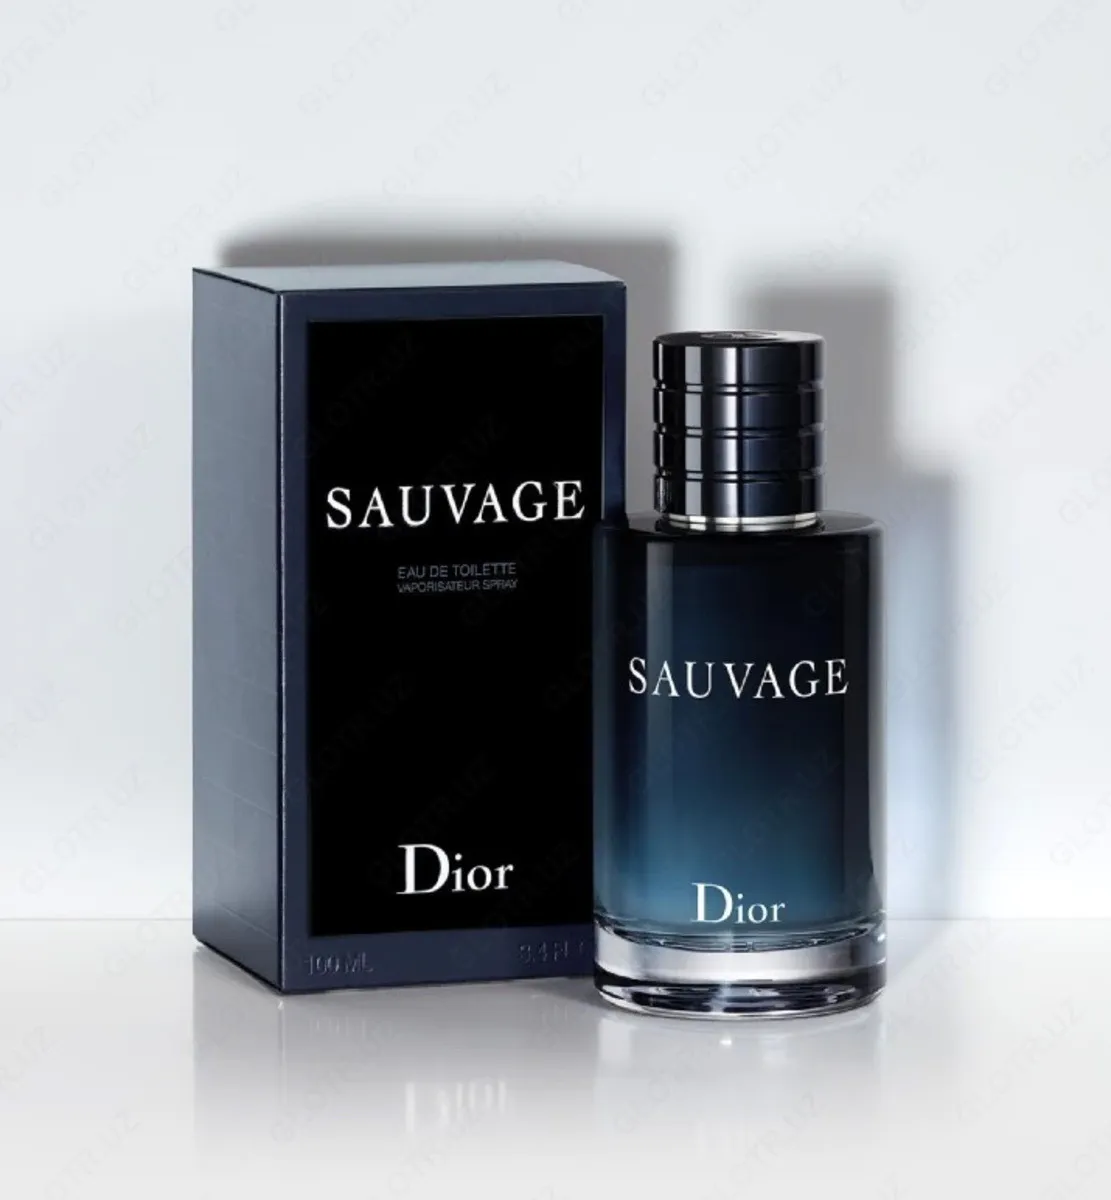 Christian Diordan Sauvage erkaklar parfyumeriyasi#2